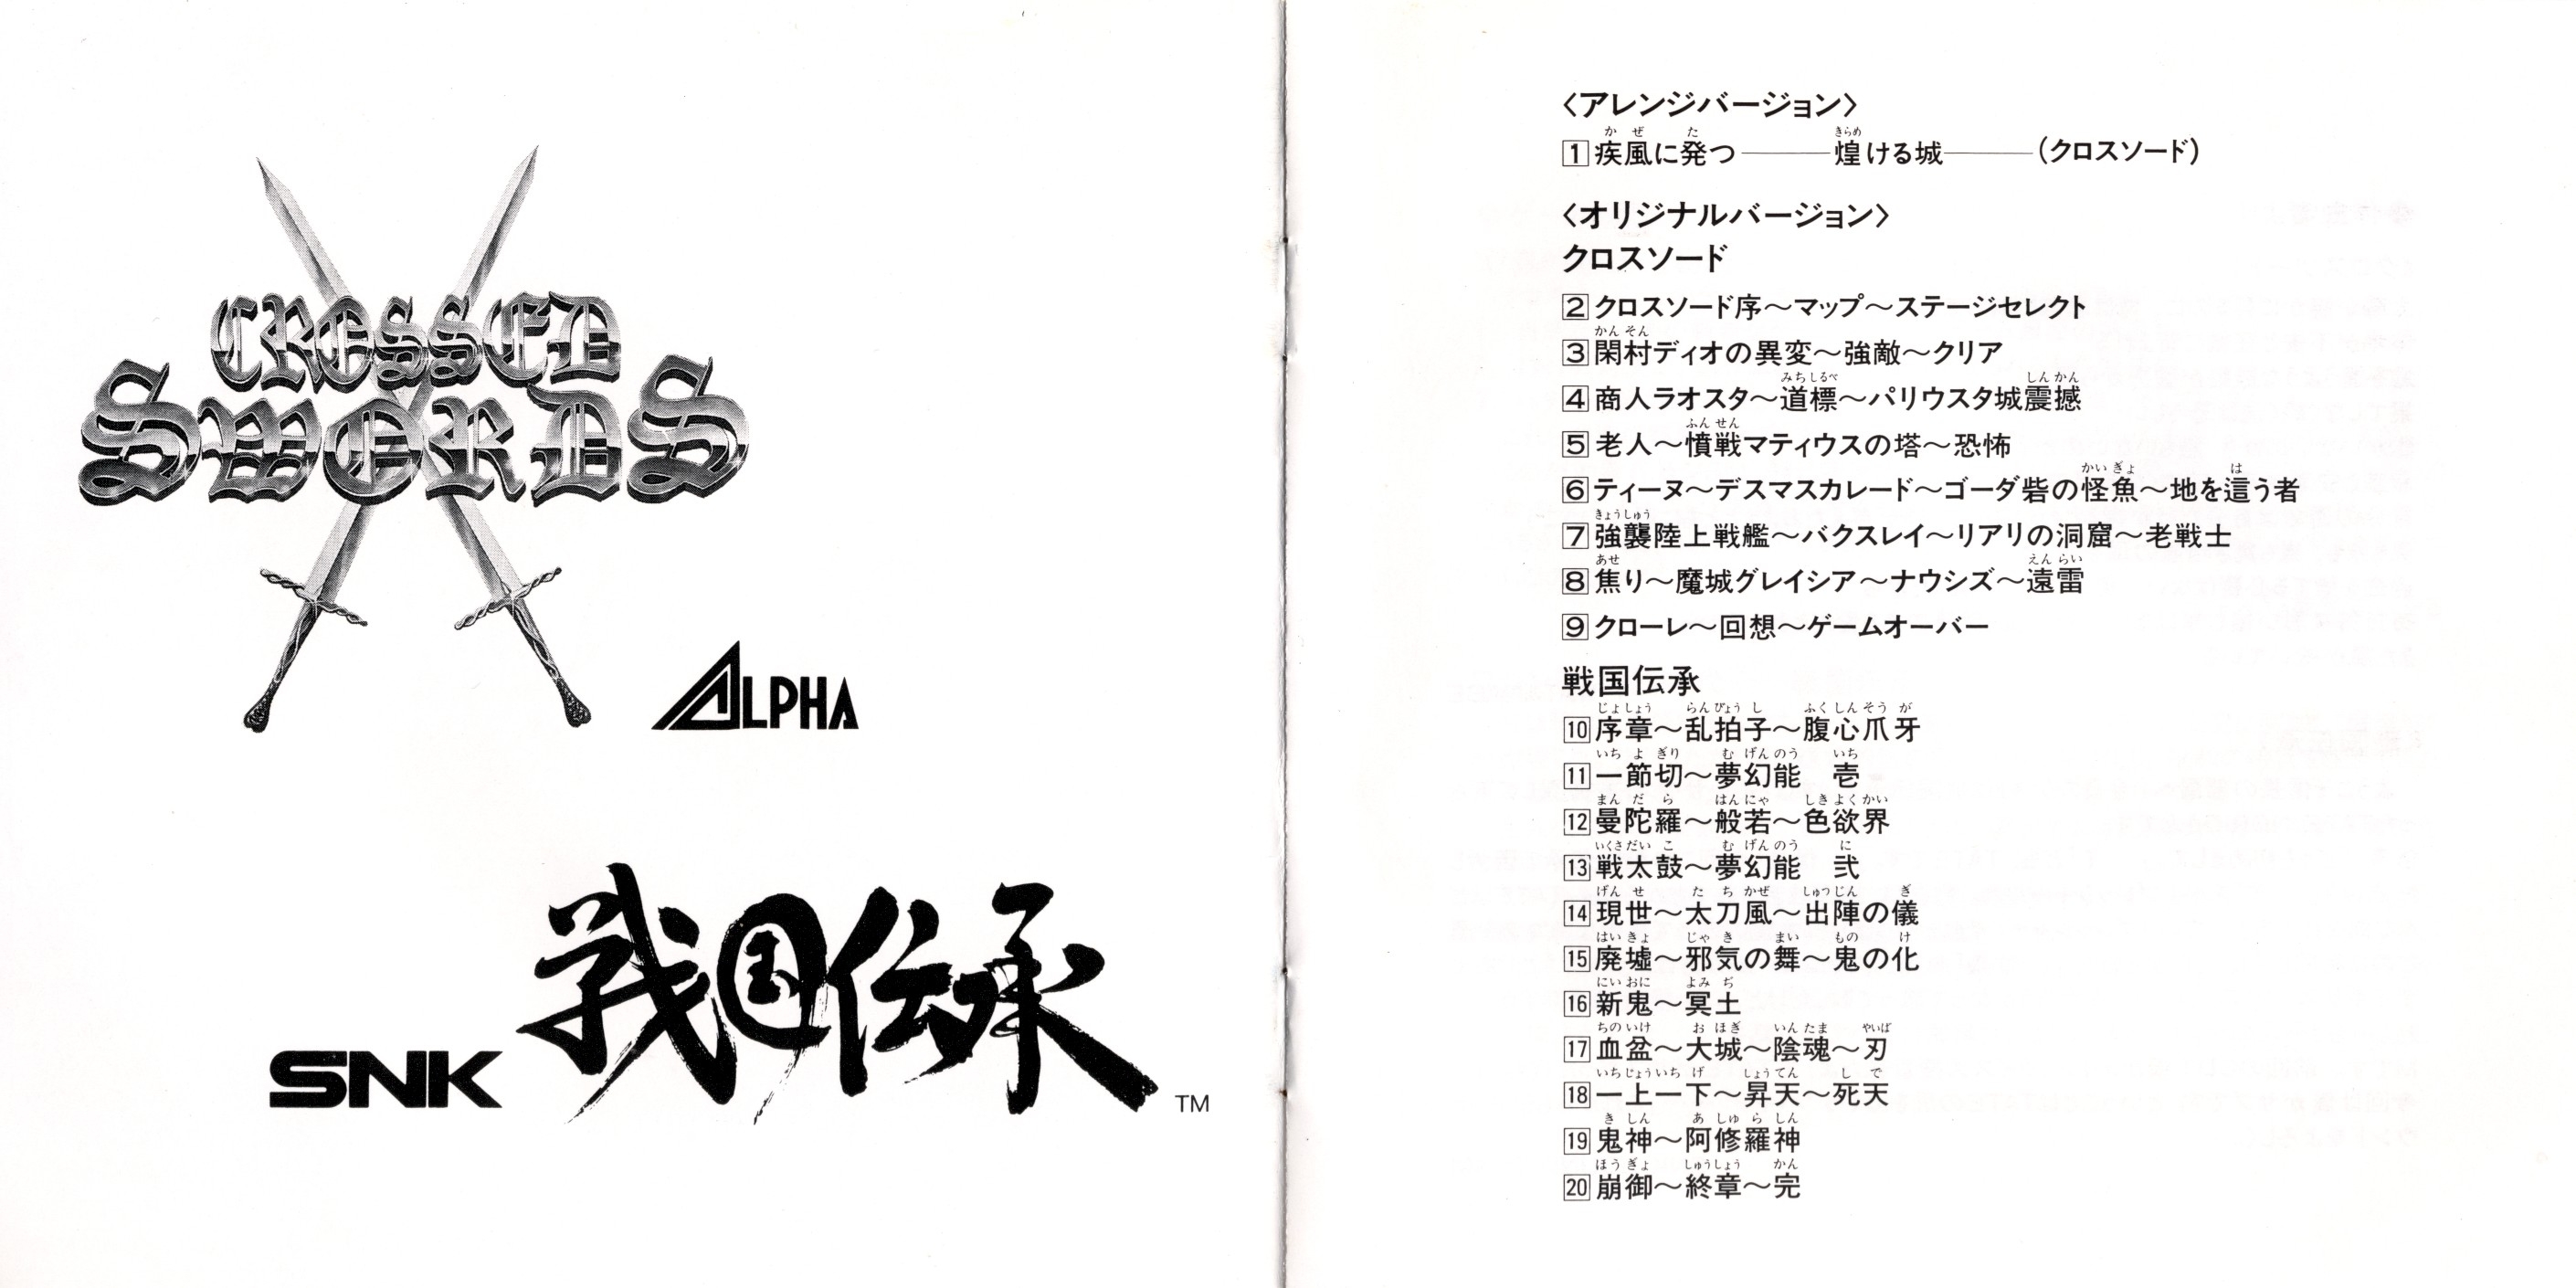 Crossed Swords / Sengoku Densyo (1991) MP3 - Download Crossed 